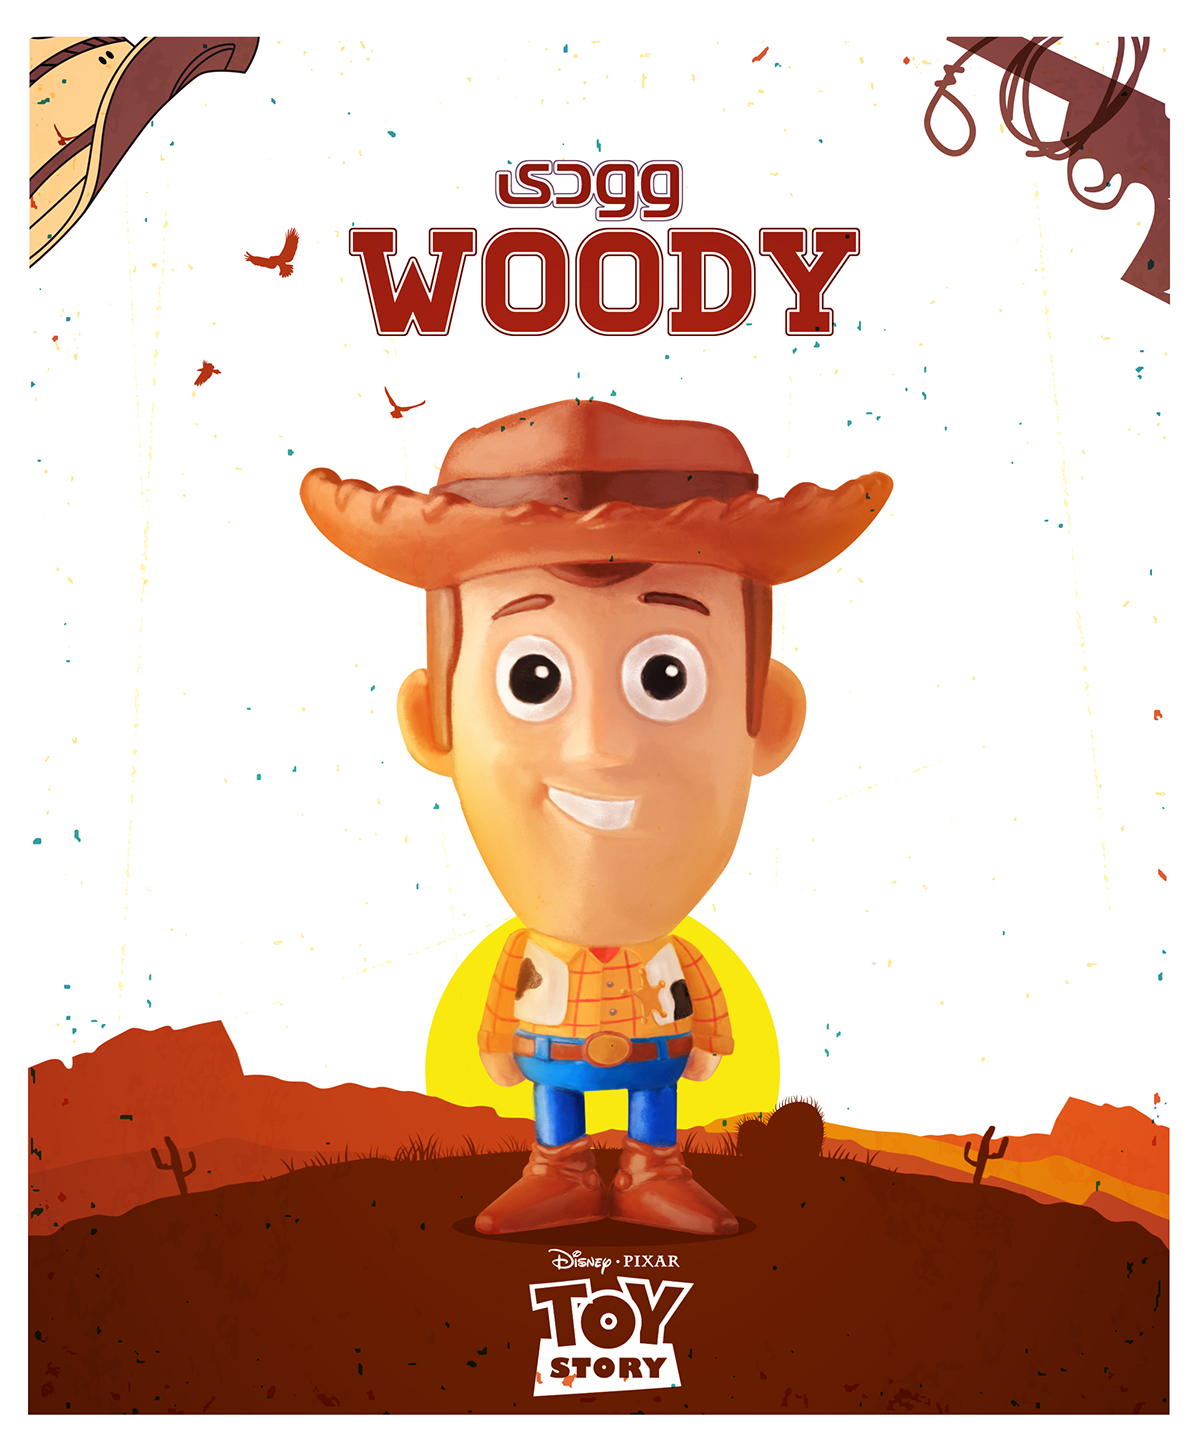 cartoon disney pixar monster toy story woody sullivan wazowski buzz